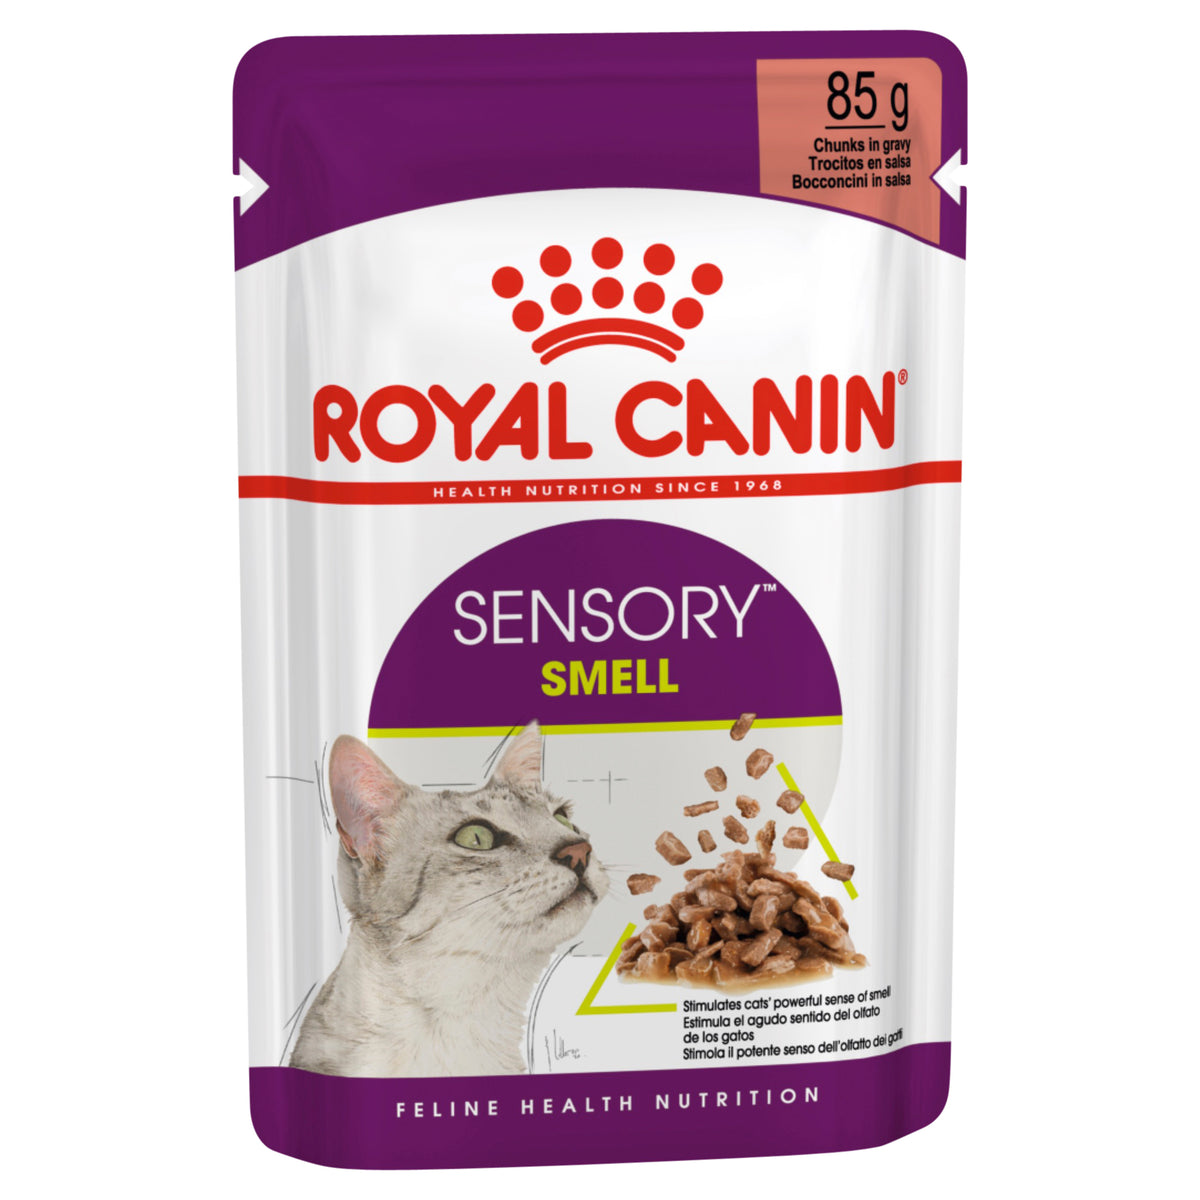 Royal Canin Sensory Smell Gravy Box 12x85g